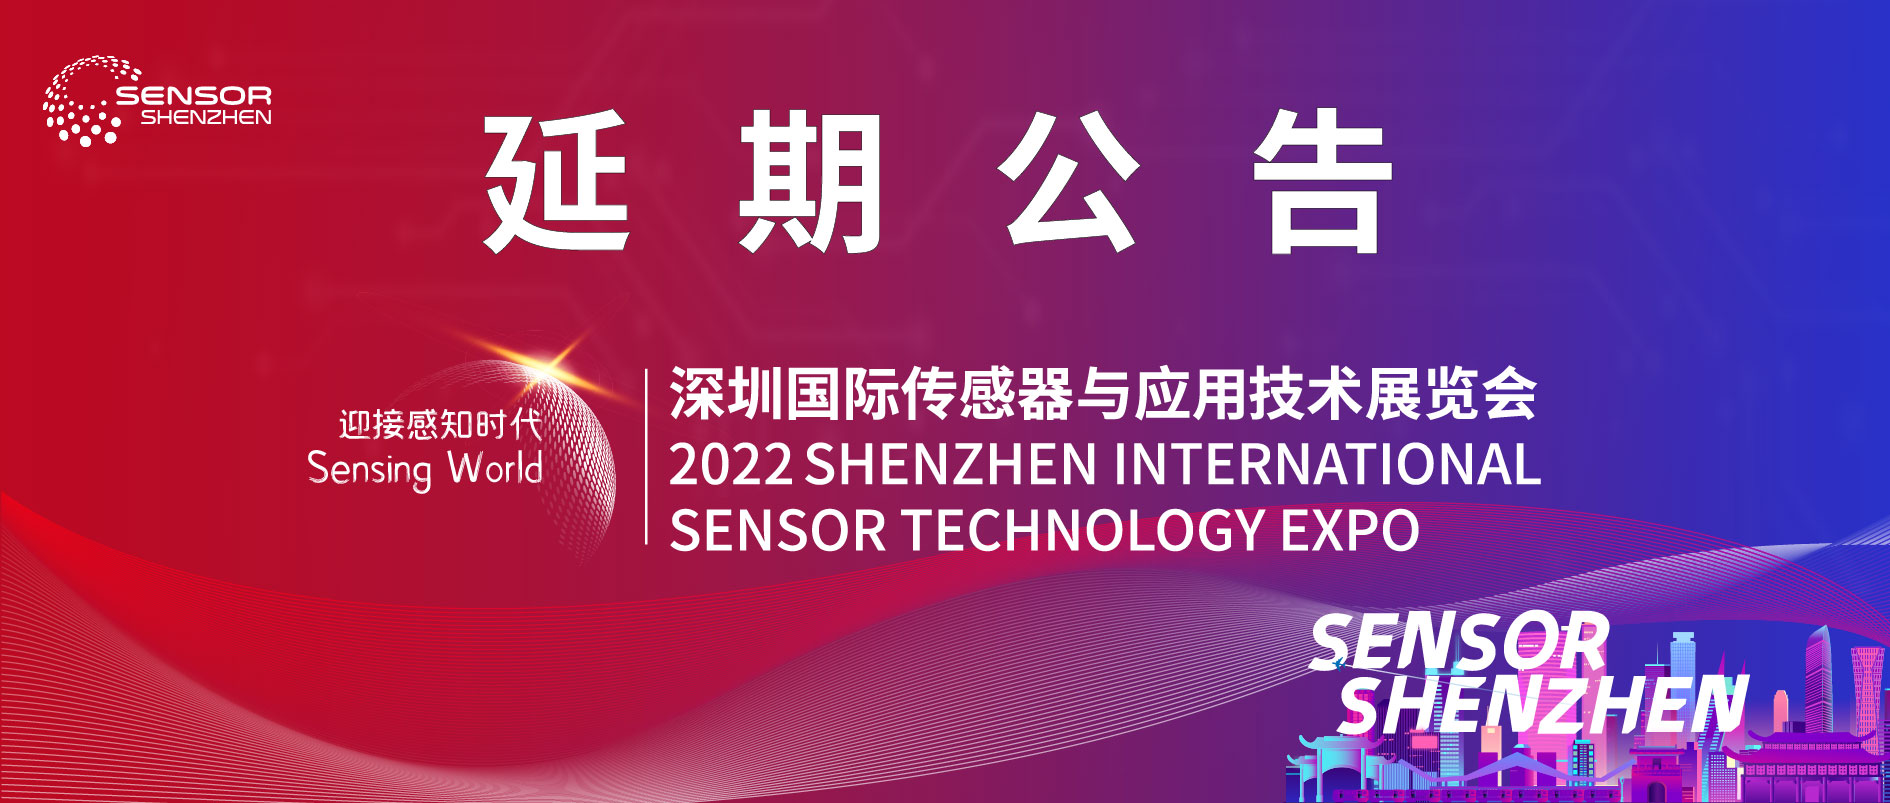 Sensor Shenzhen KV 1600x900 延期公告-01